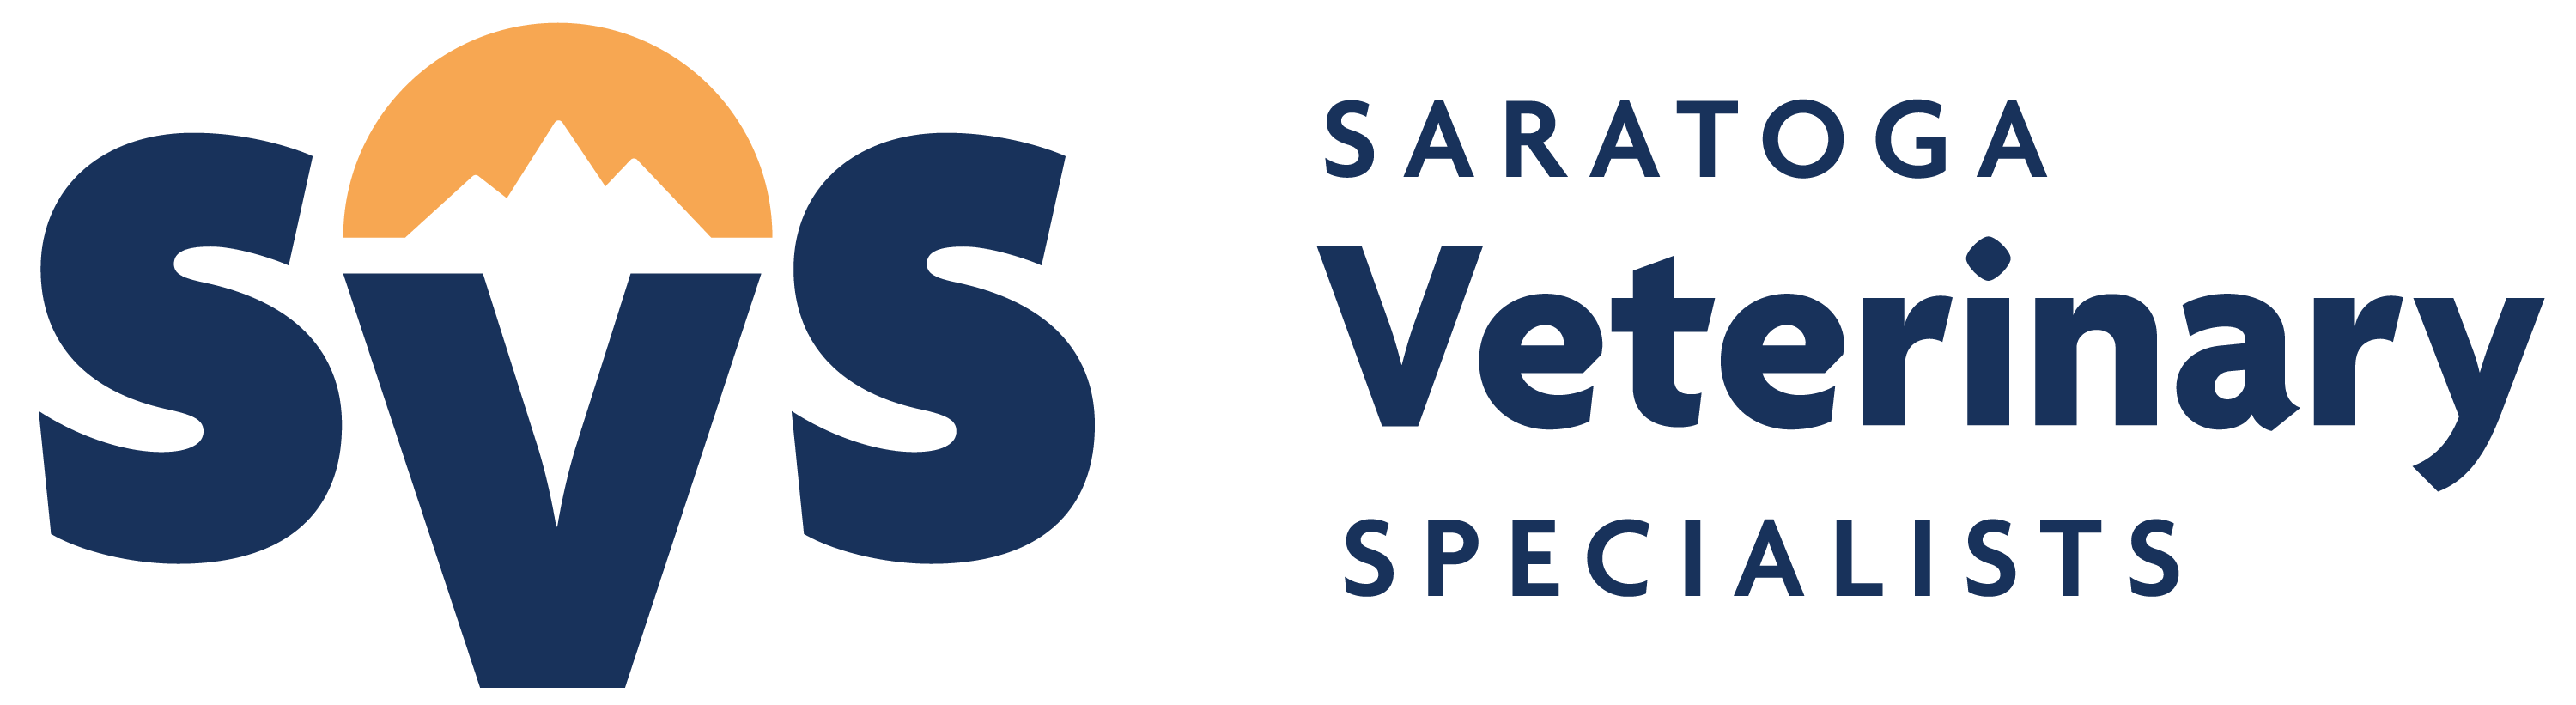 saratoga veterinary specialist logo design